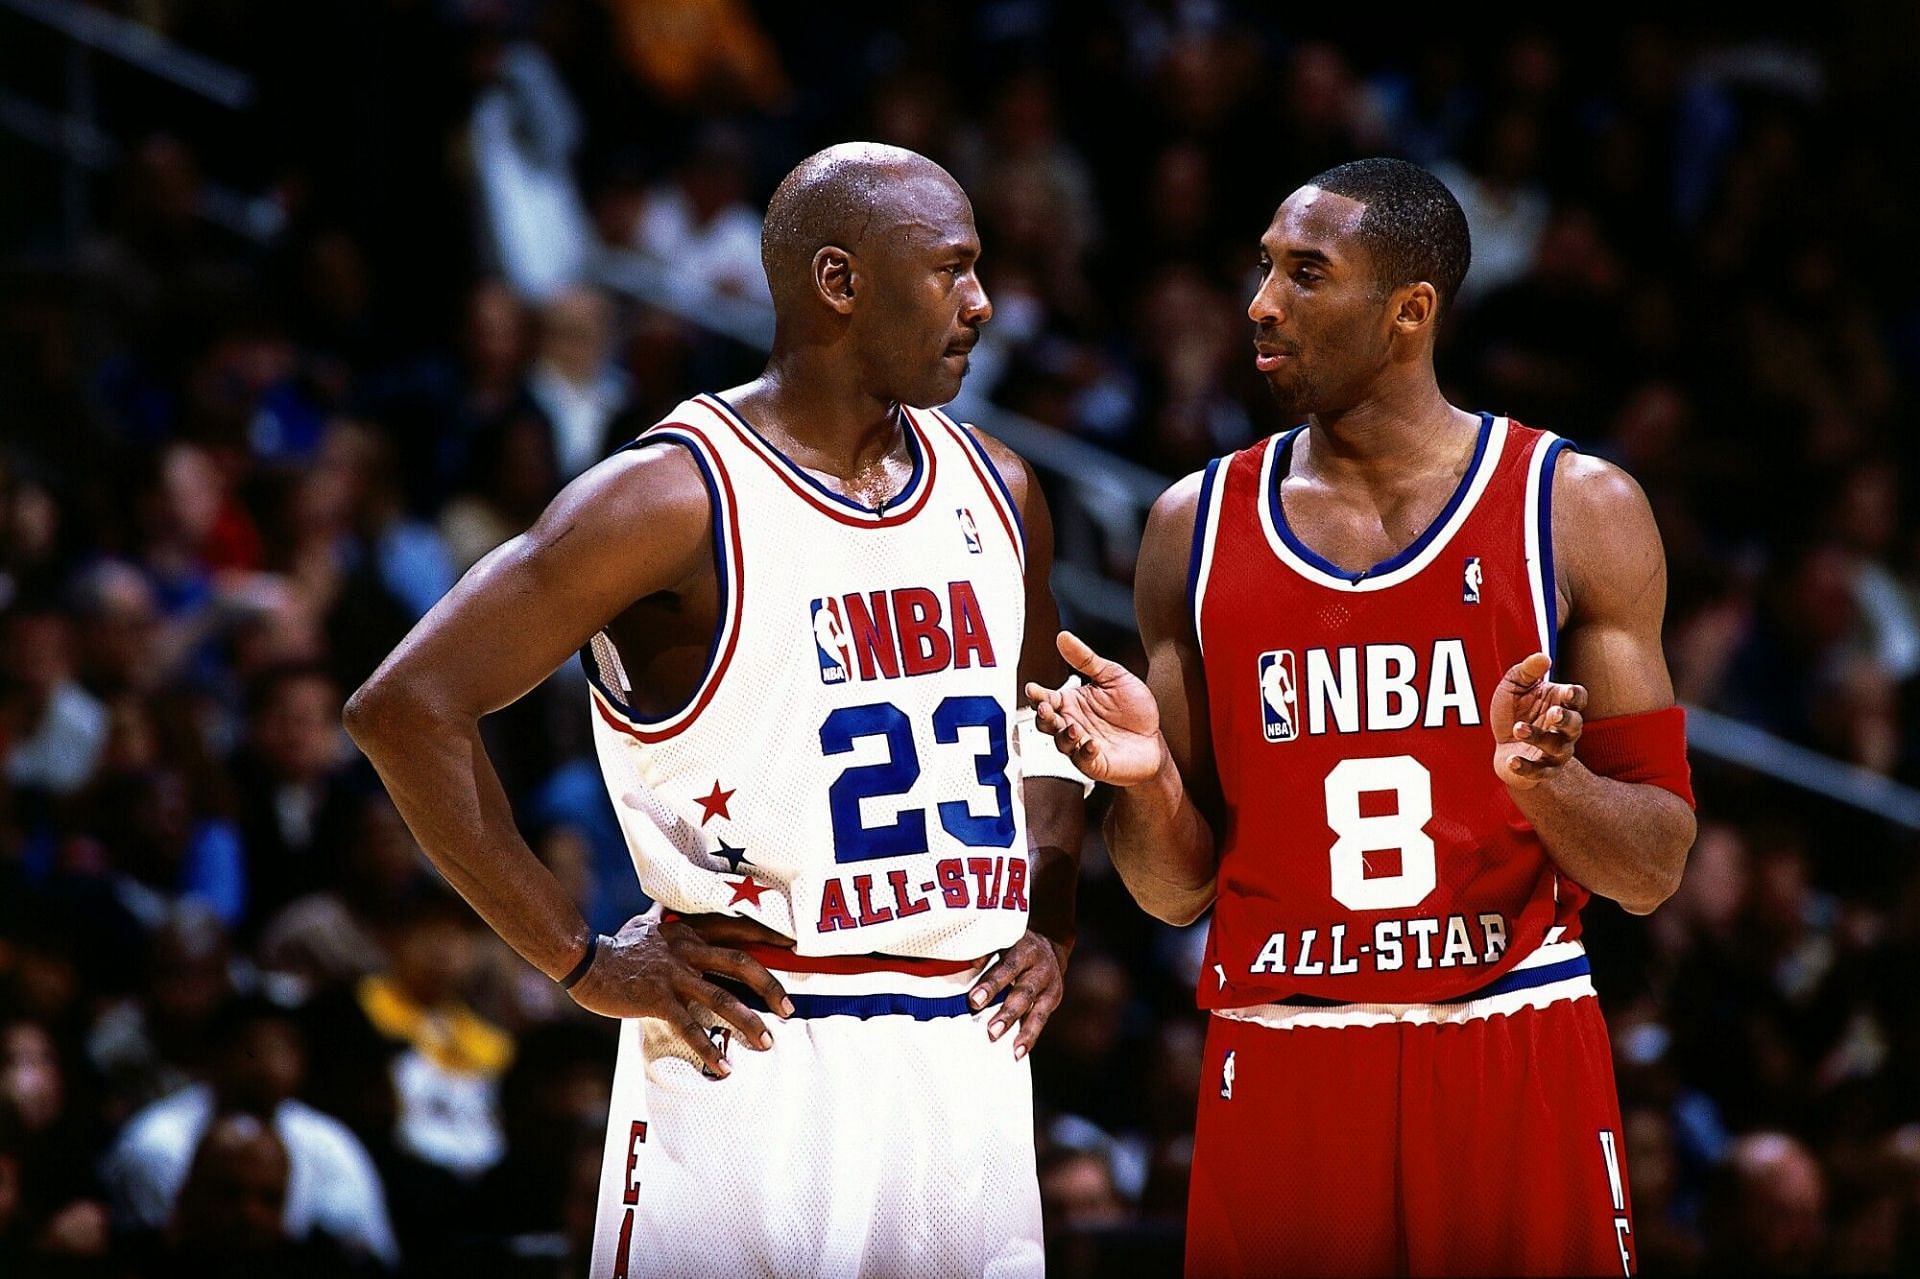 Michael Jordan triggered Kobe Bryant to a double-nickel game